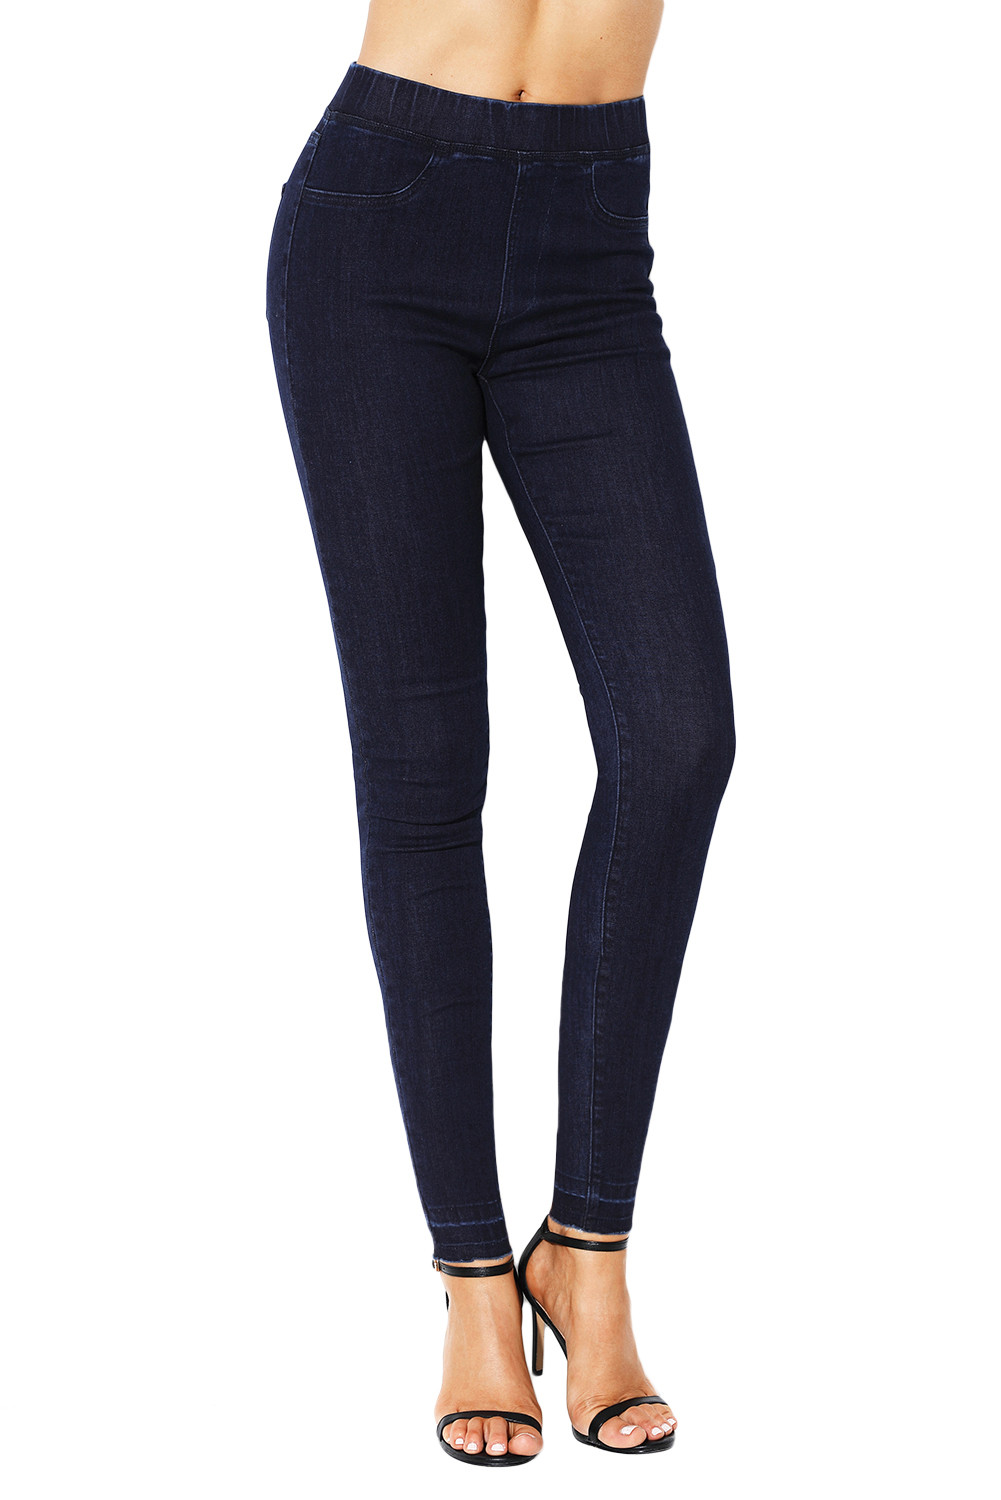 US$ 14.15 Dropship Navy Blue Elastic Waist Jeans Stretch Pants for Women